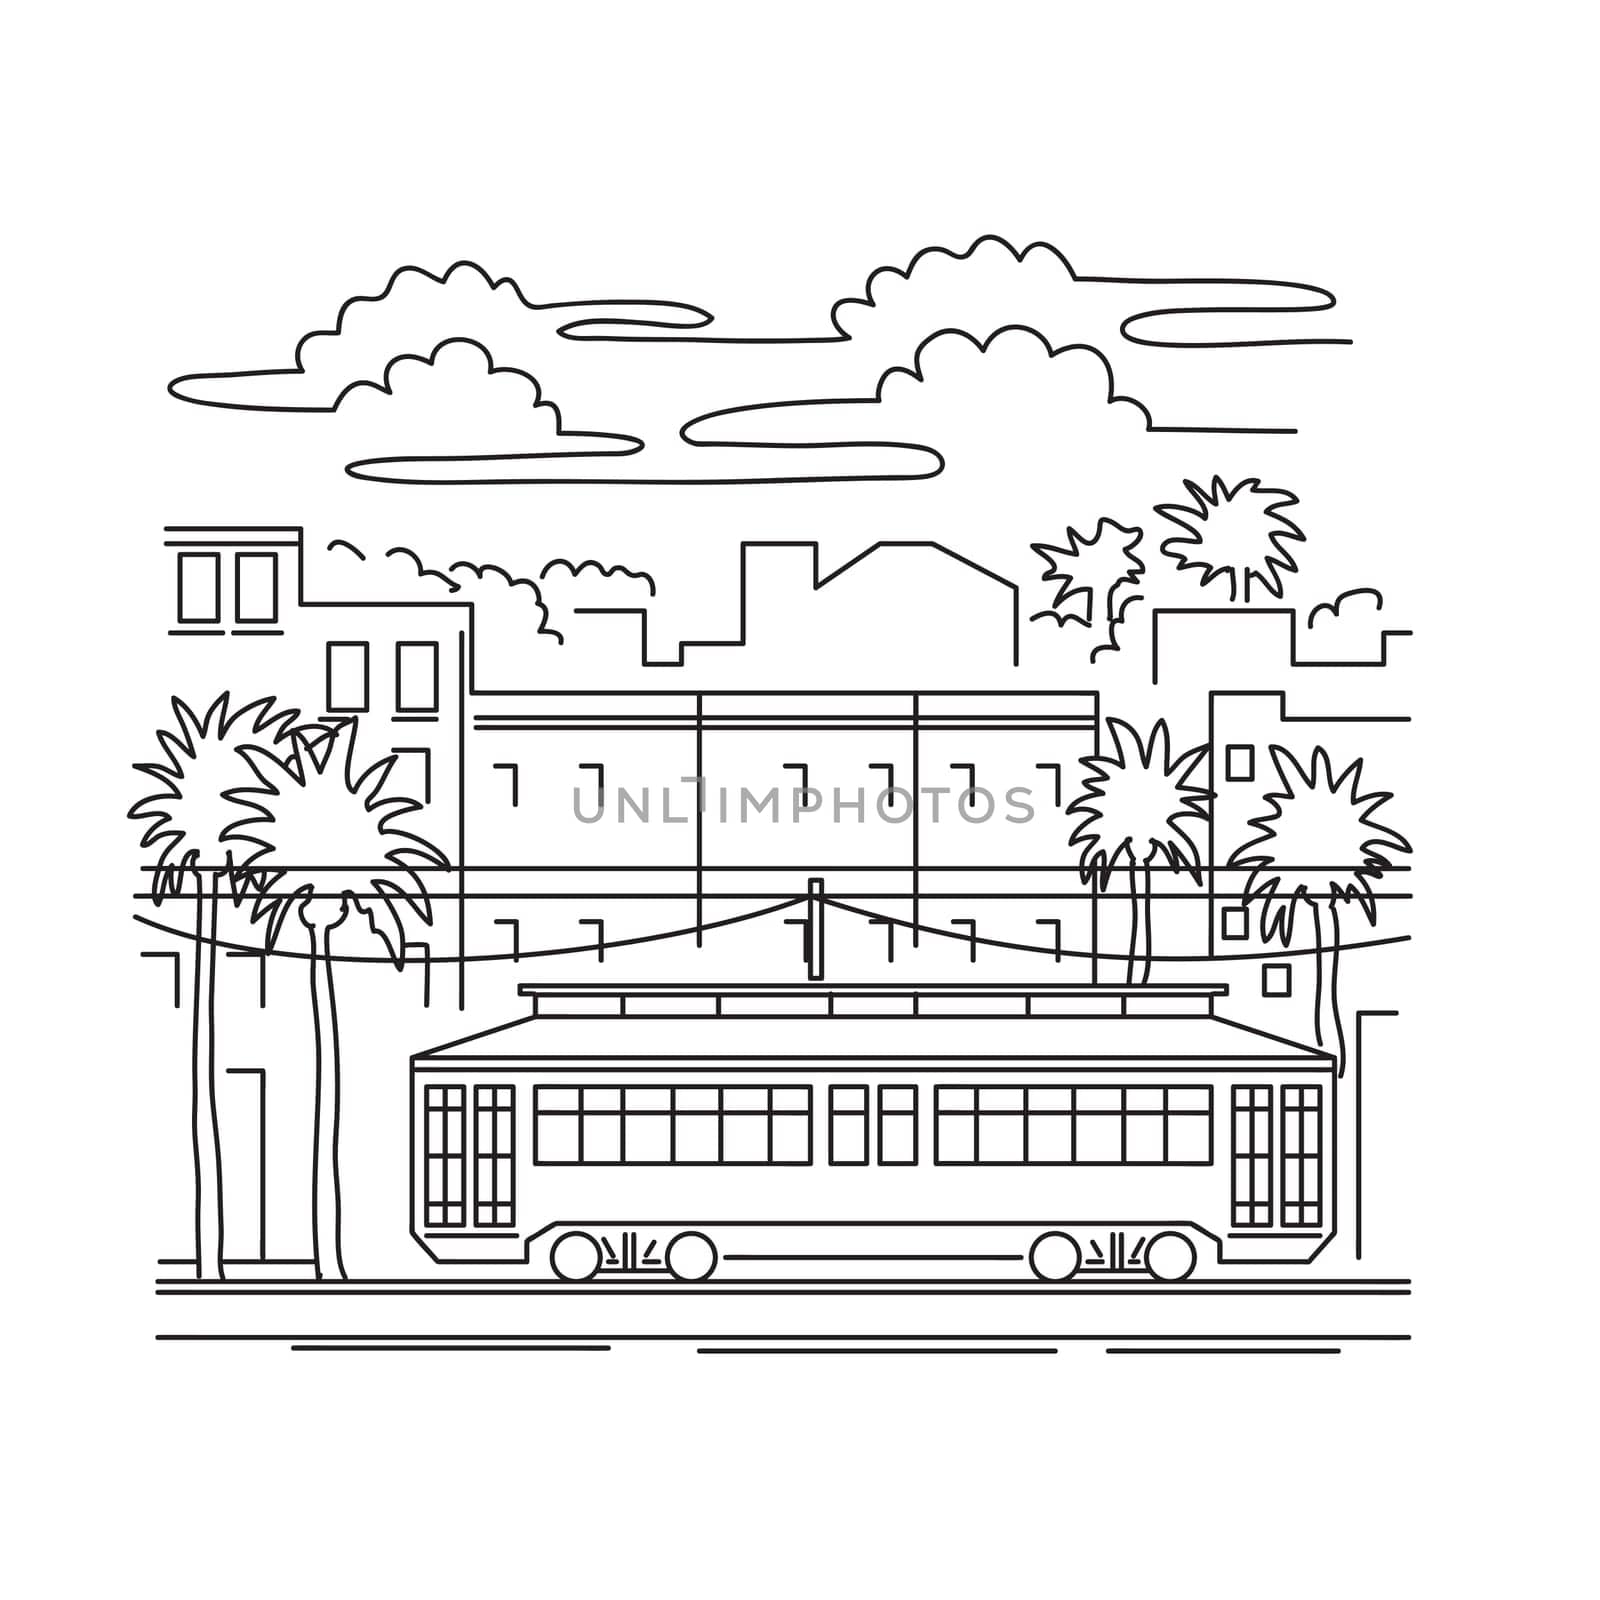 Streetcar or Trolley Car in New Orleans Louisiana Mono Line Art by patrimonio